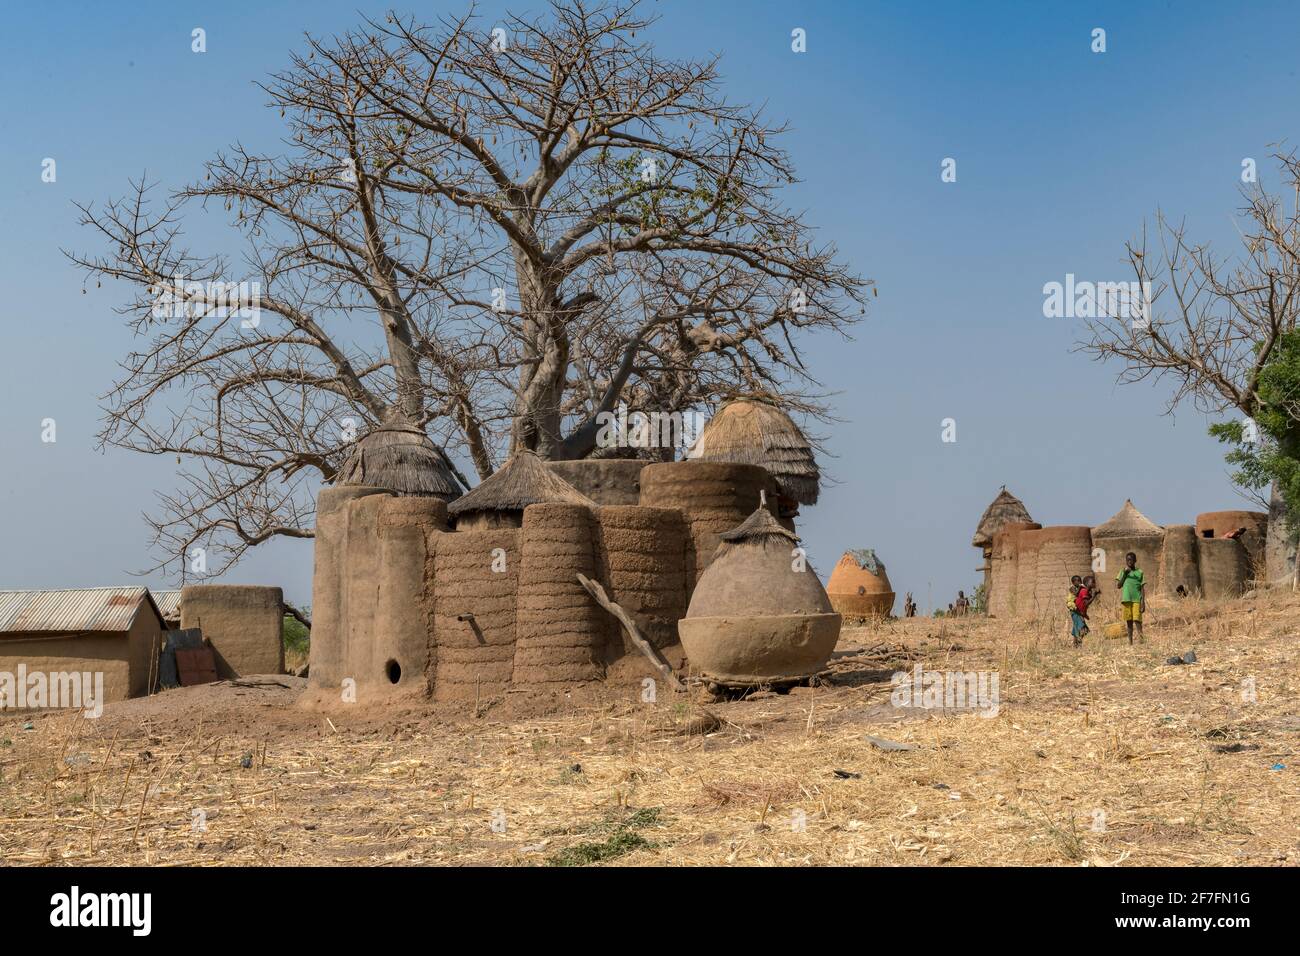 Earth tower house, called takienta, of Batammariba people in Koutammakou region, La Kara, Togo, West Africa, Africa Stock Photo